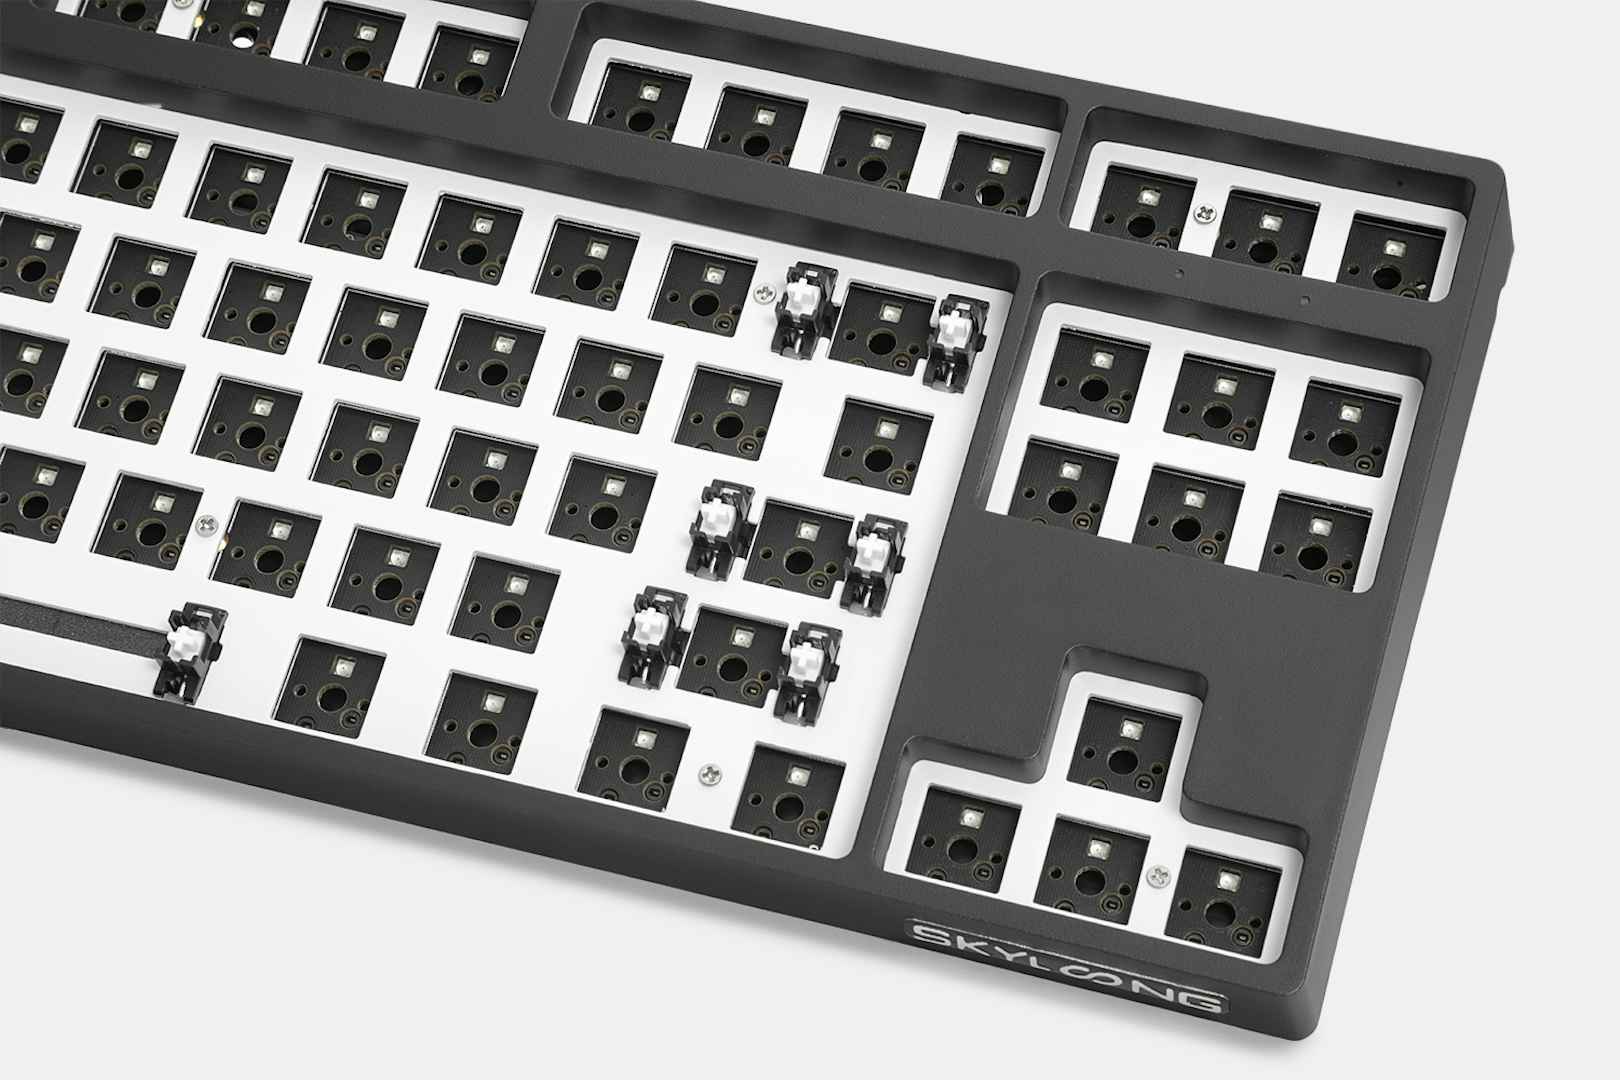 Skyloong GK87 RGB Hot-Swappable TKL Keyboard Kit | Mechanical Keyboards